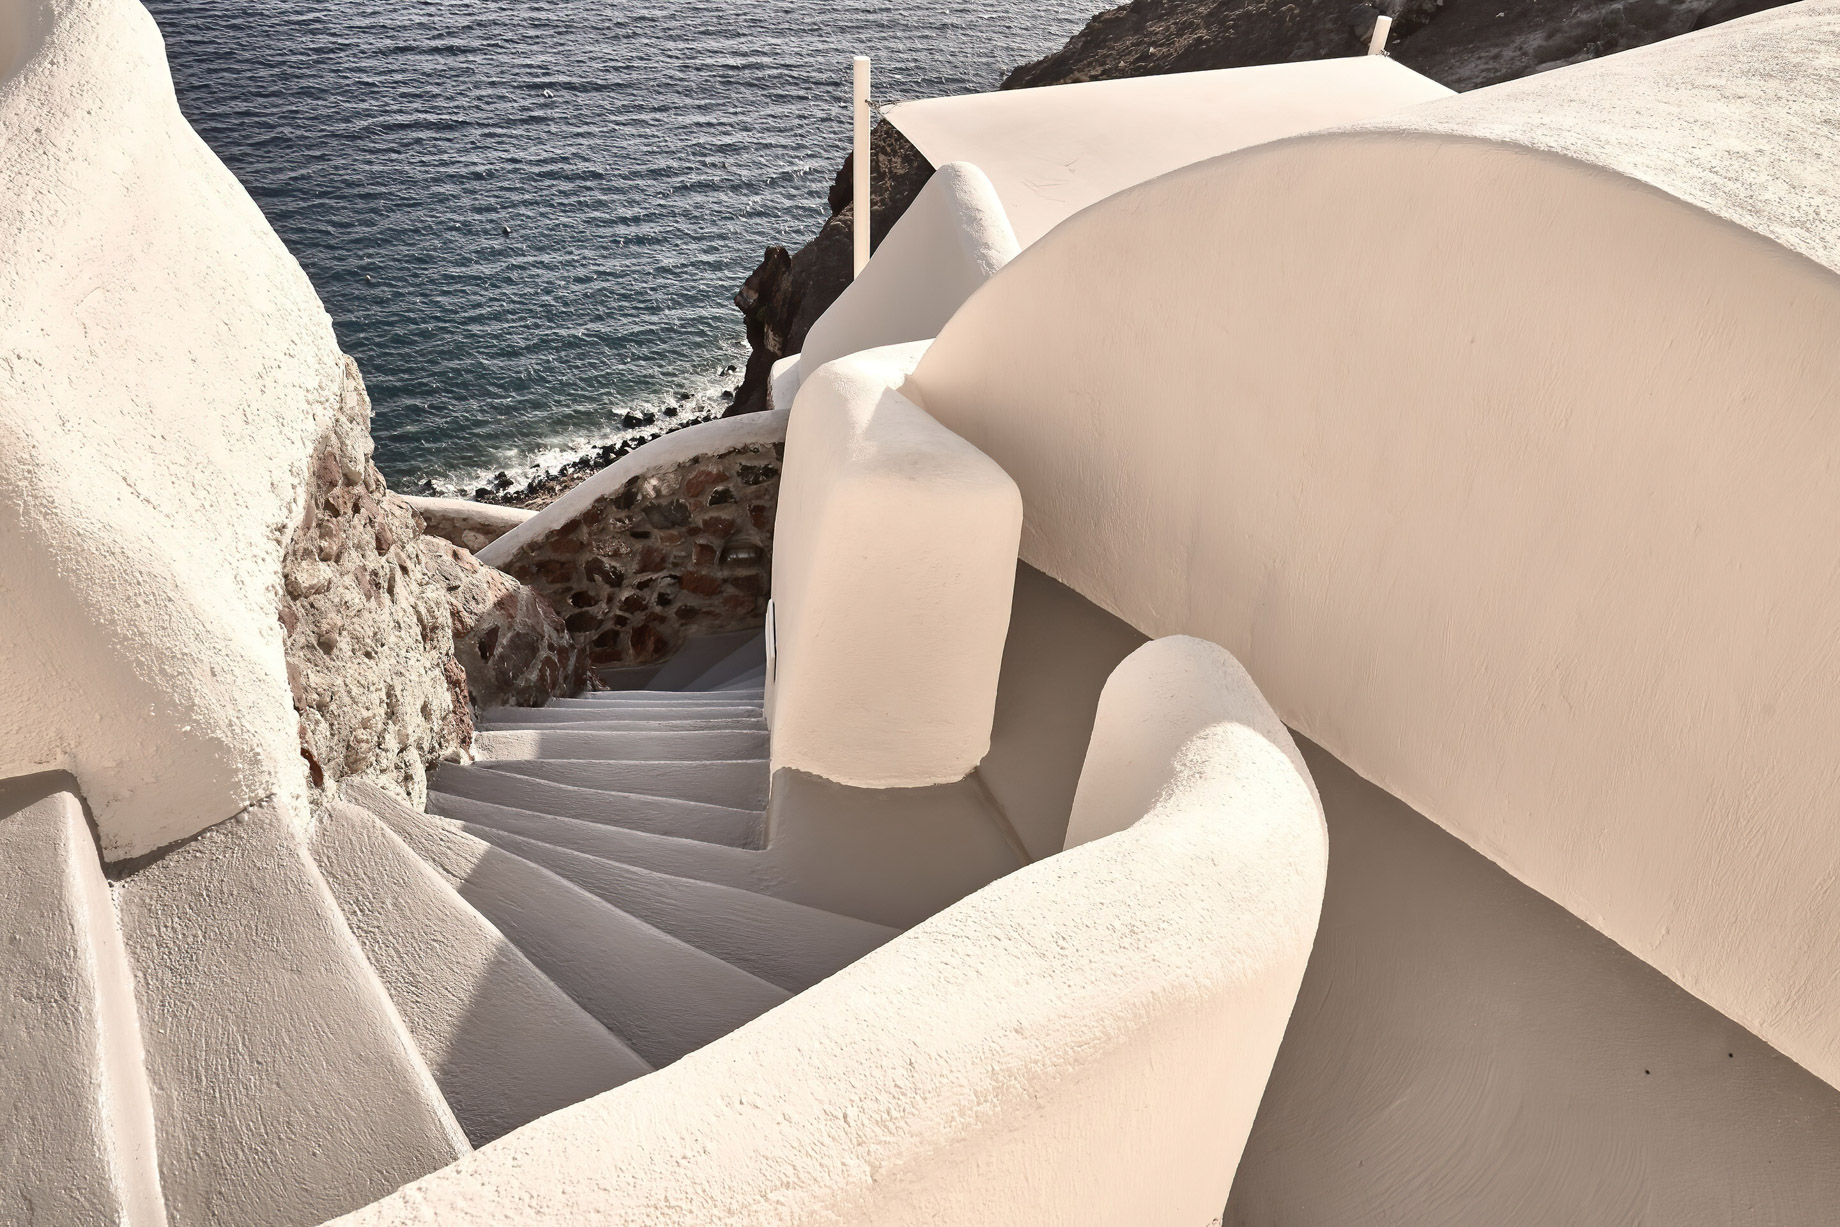 Mystique Hotel Santorini – Oia, Santorini Island, Greece – Cycladic Architecture Stair Detail